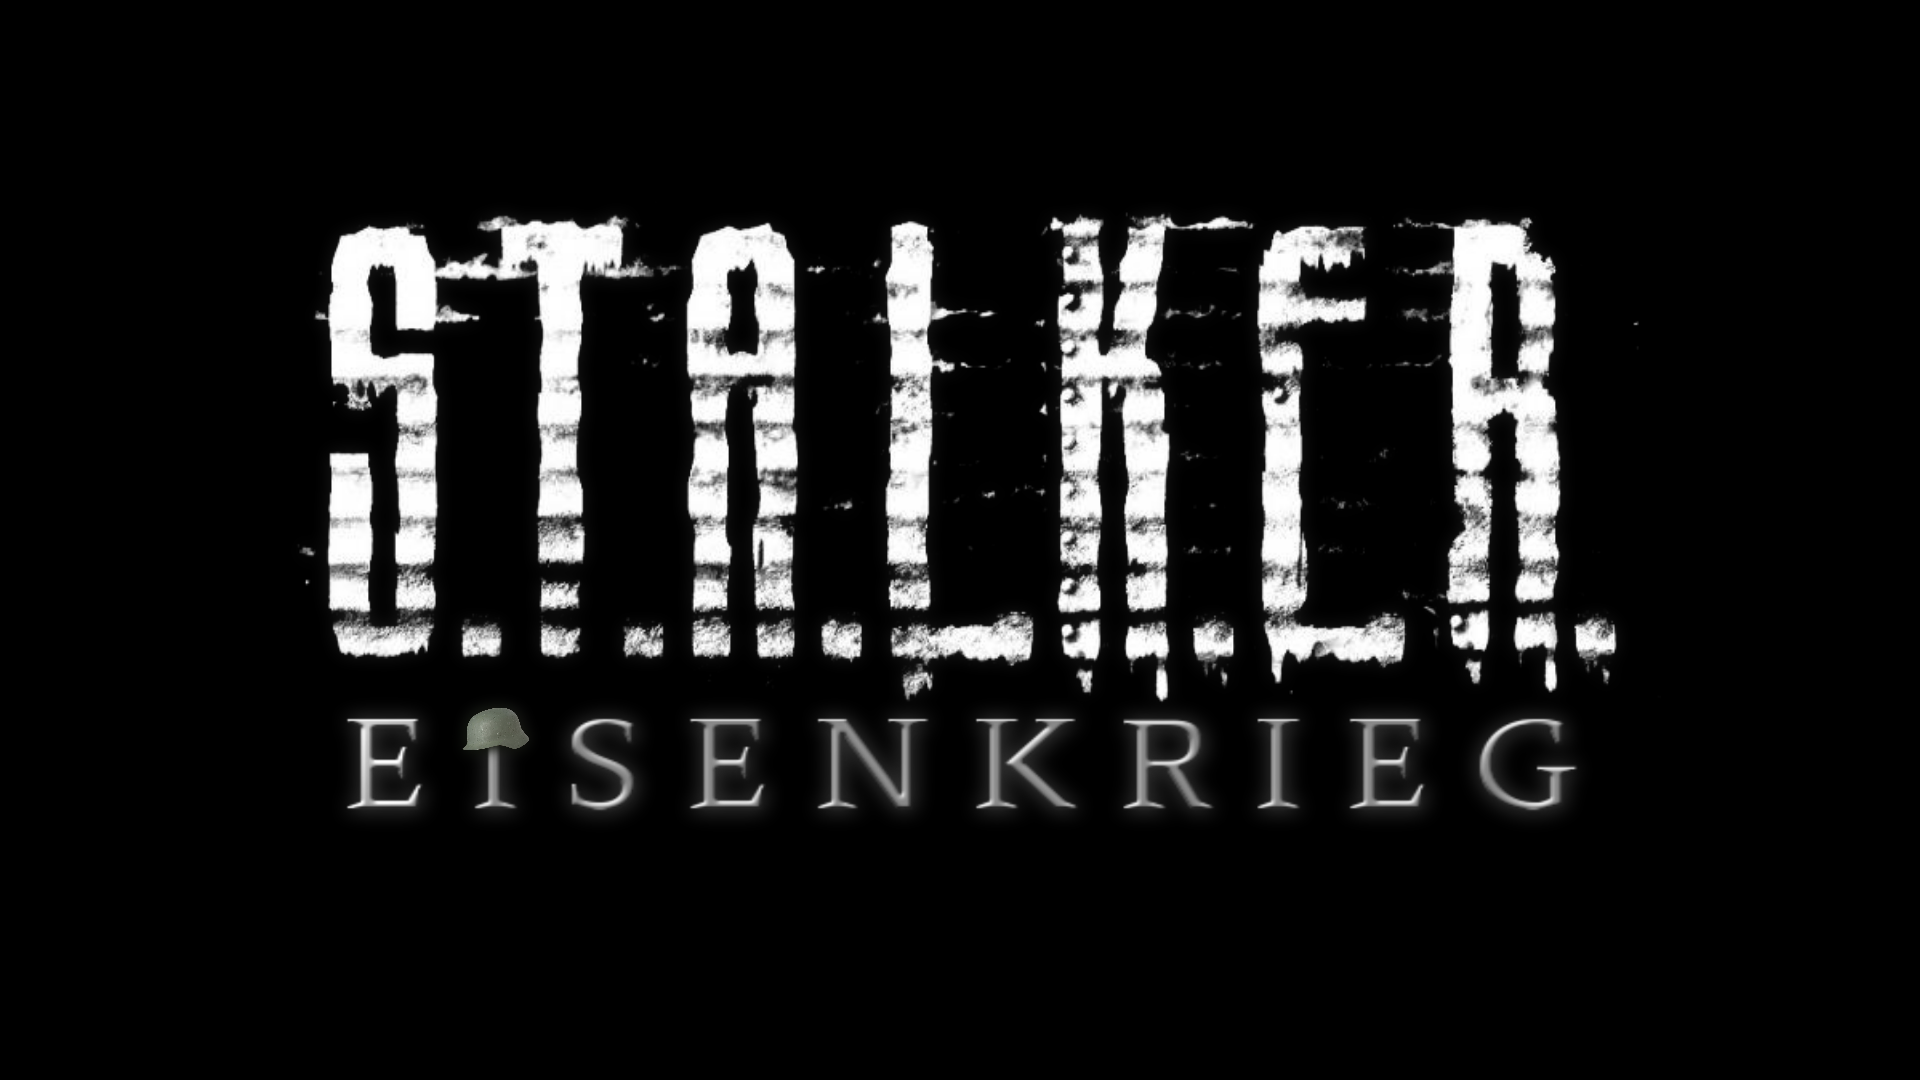 STALKER 2 Trailer Reveal Menu Music addon - Mod DB